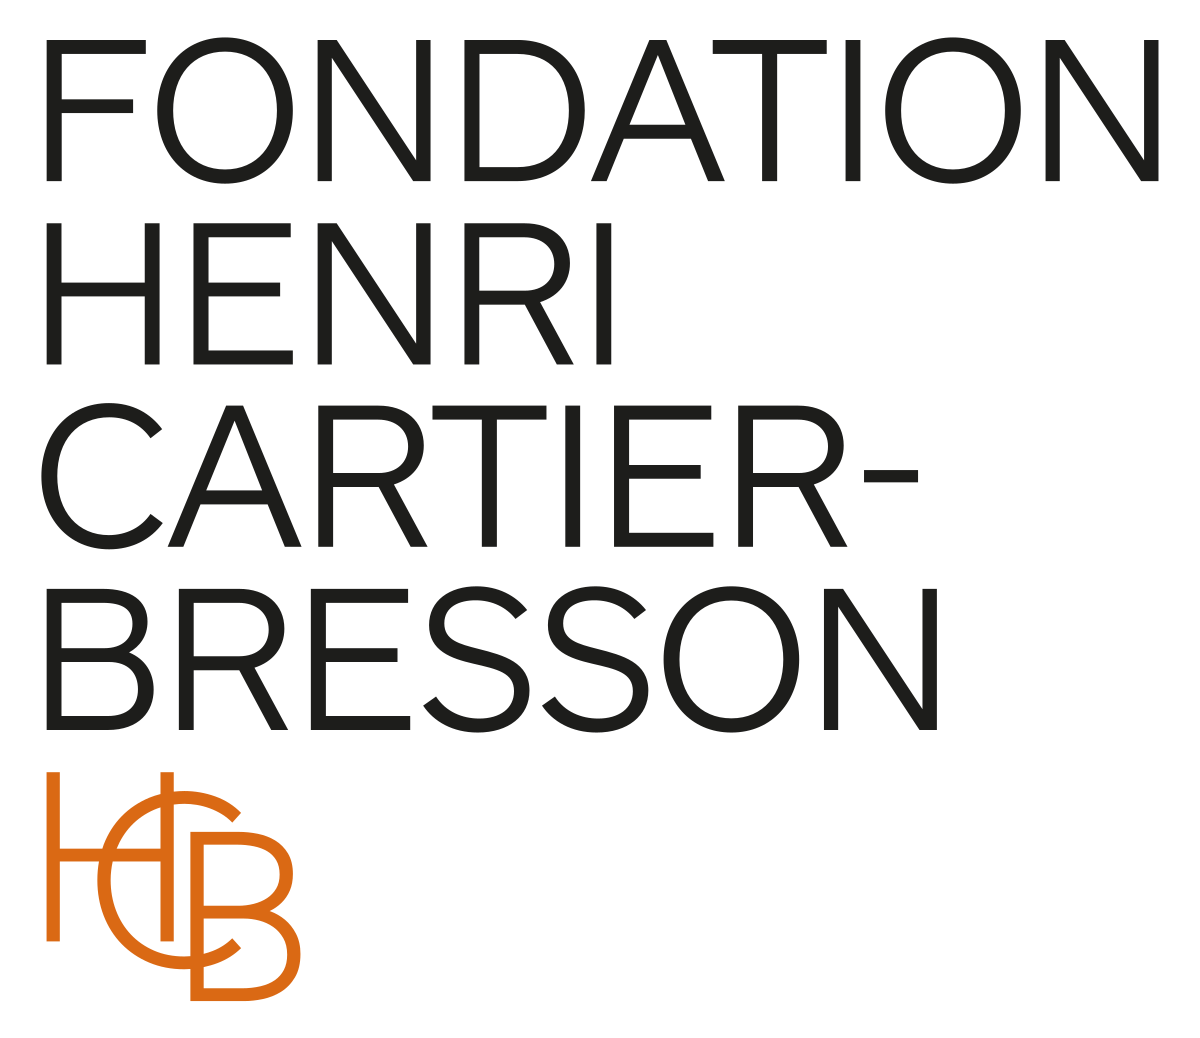 fondation cartier wiki